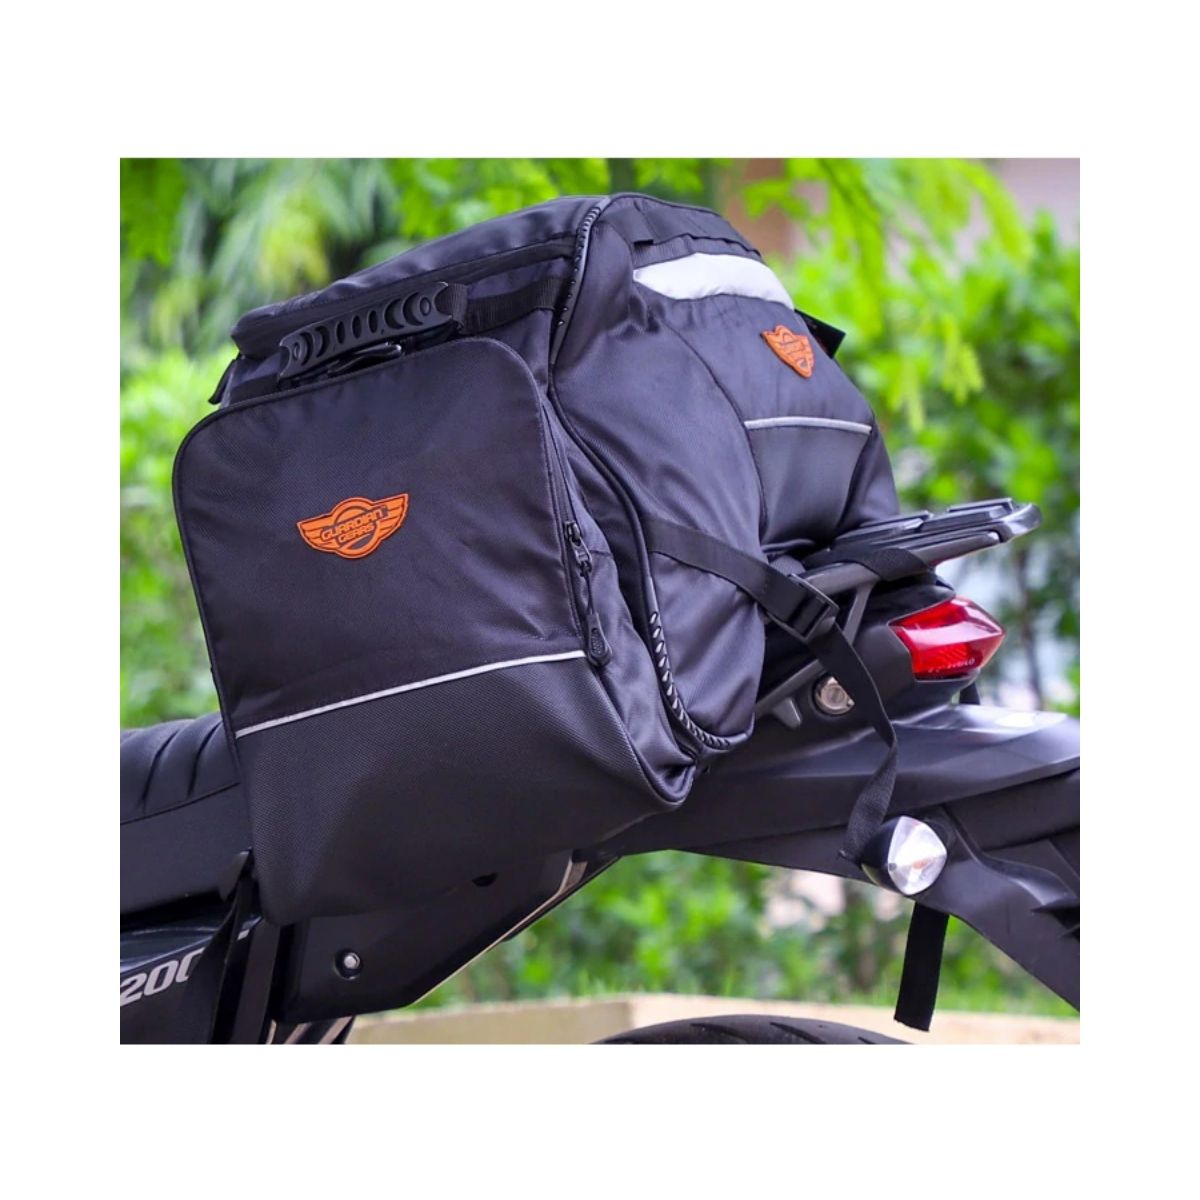 Rhino 70L Tail Bag with Rain Cover - Black - 13